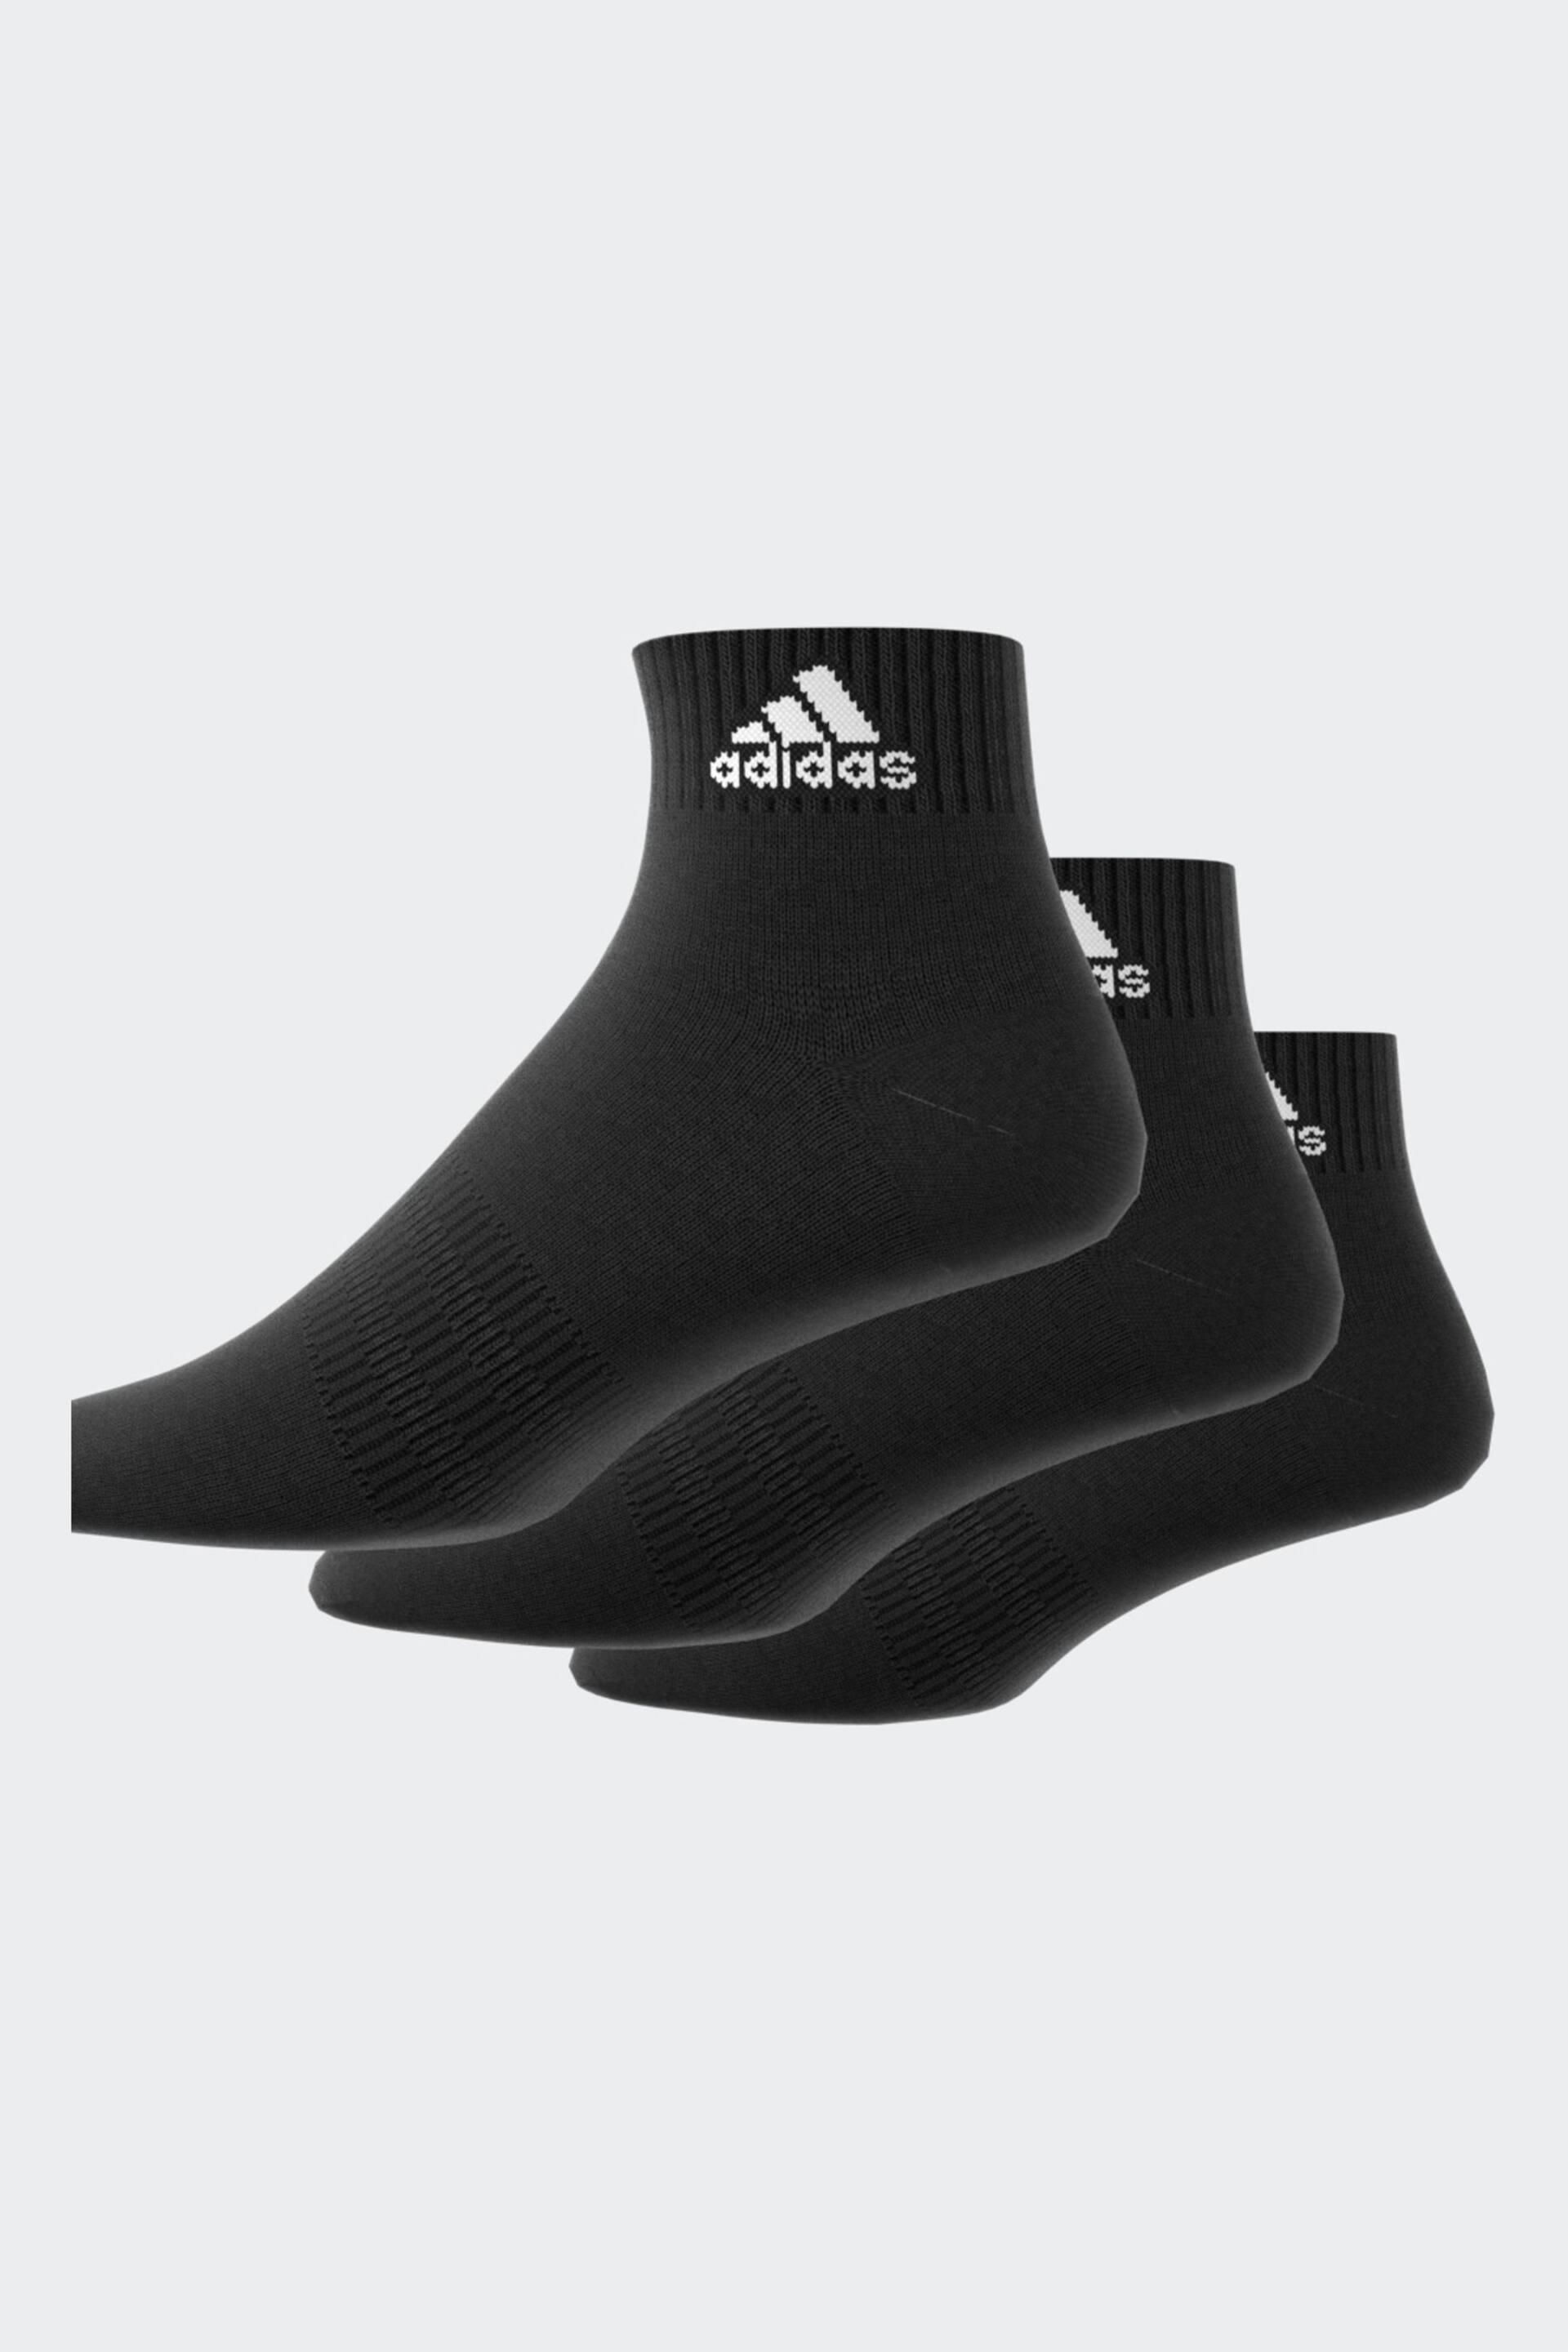 adidas Dark Black Cushioned Sportswear Ankle Socks 3 Pack - Image 2 of 6